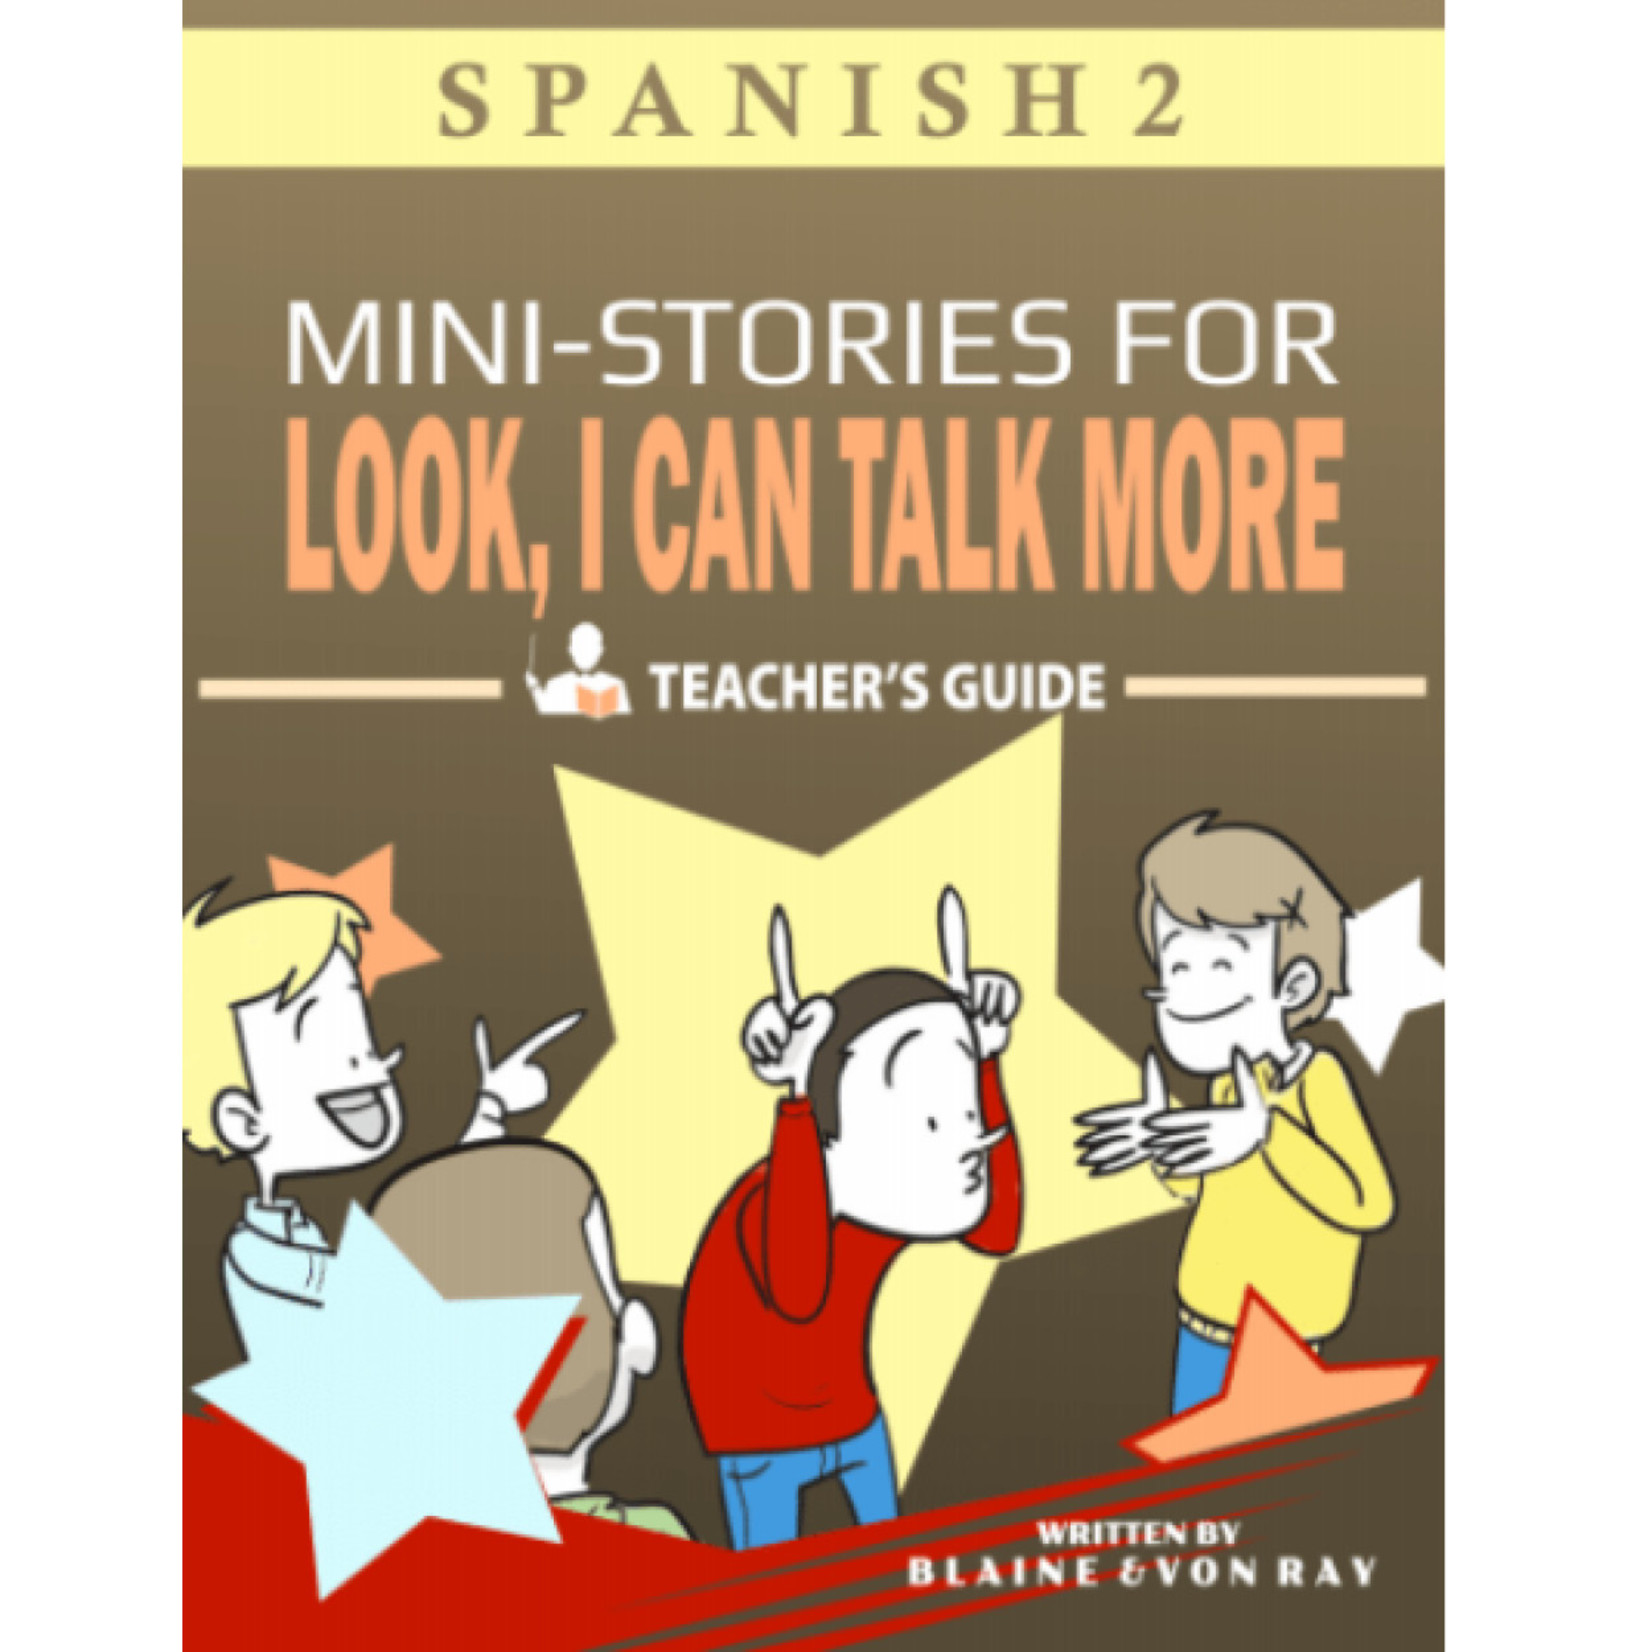 Spanish Readers: ¿Qué hora es? – Creative Teaching Press